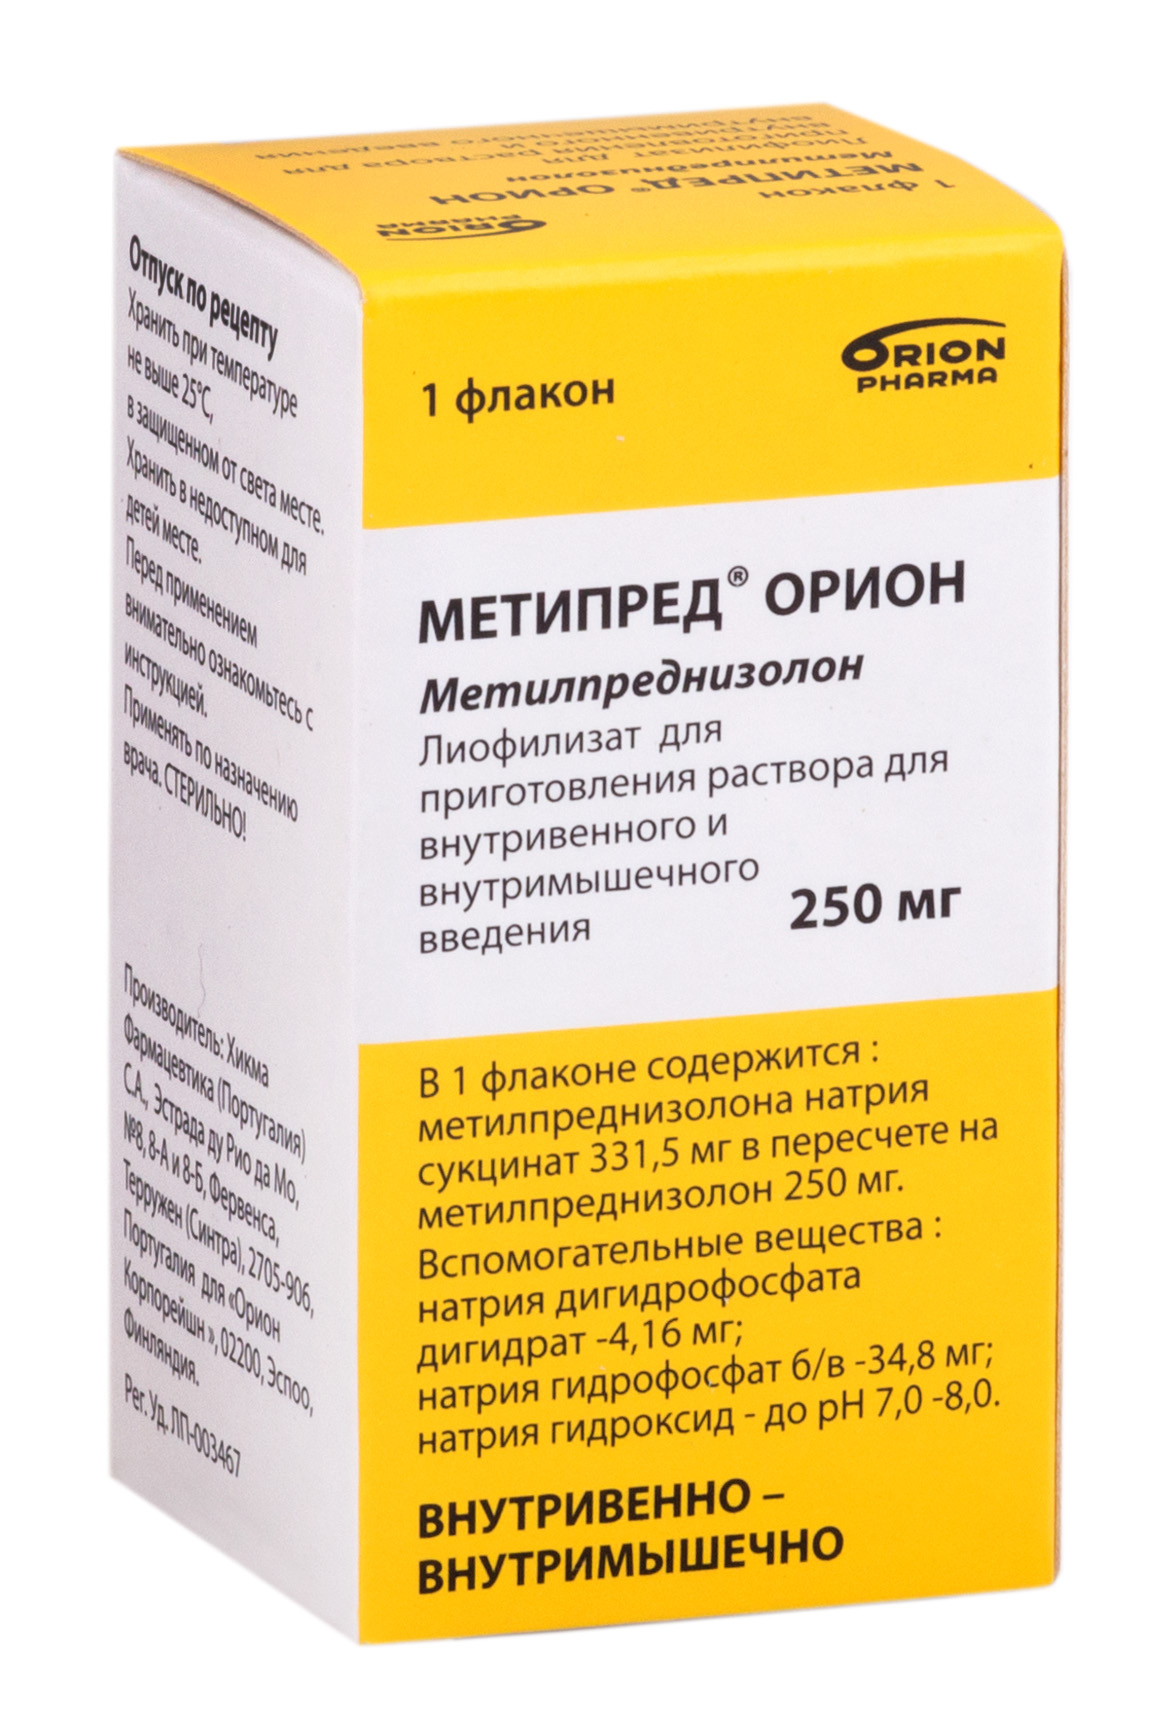 Метипред купить в нижнем новгороде. Метипред 16 мг таблетки. Метипред лиофилизат 250 мг. Метипред 250 мг таблетки. Метипред Орион 250 мг.